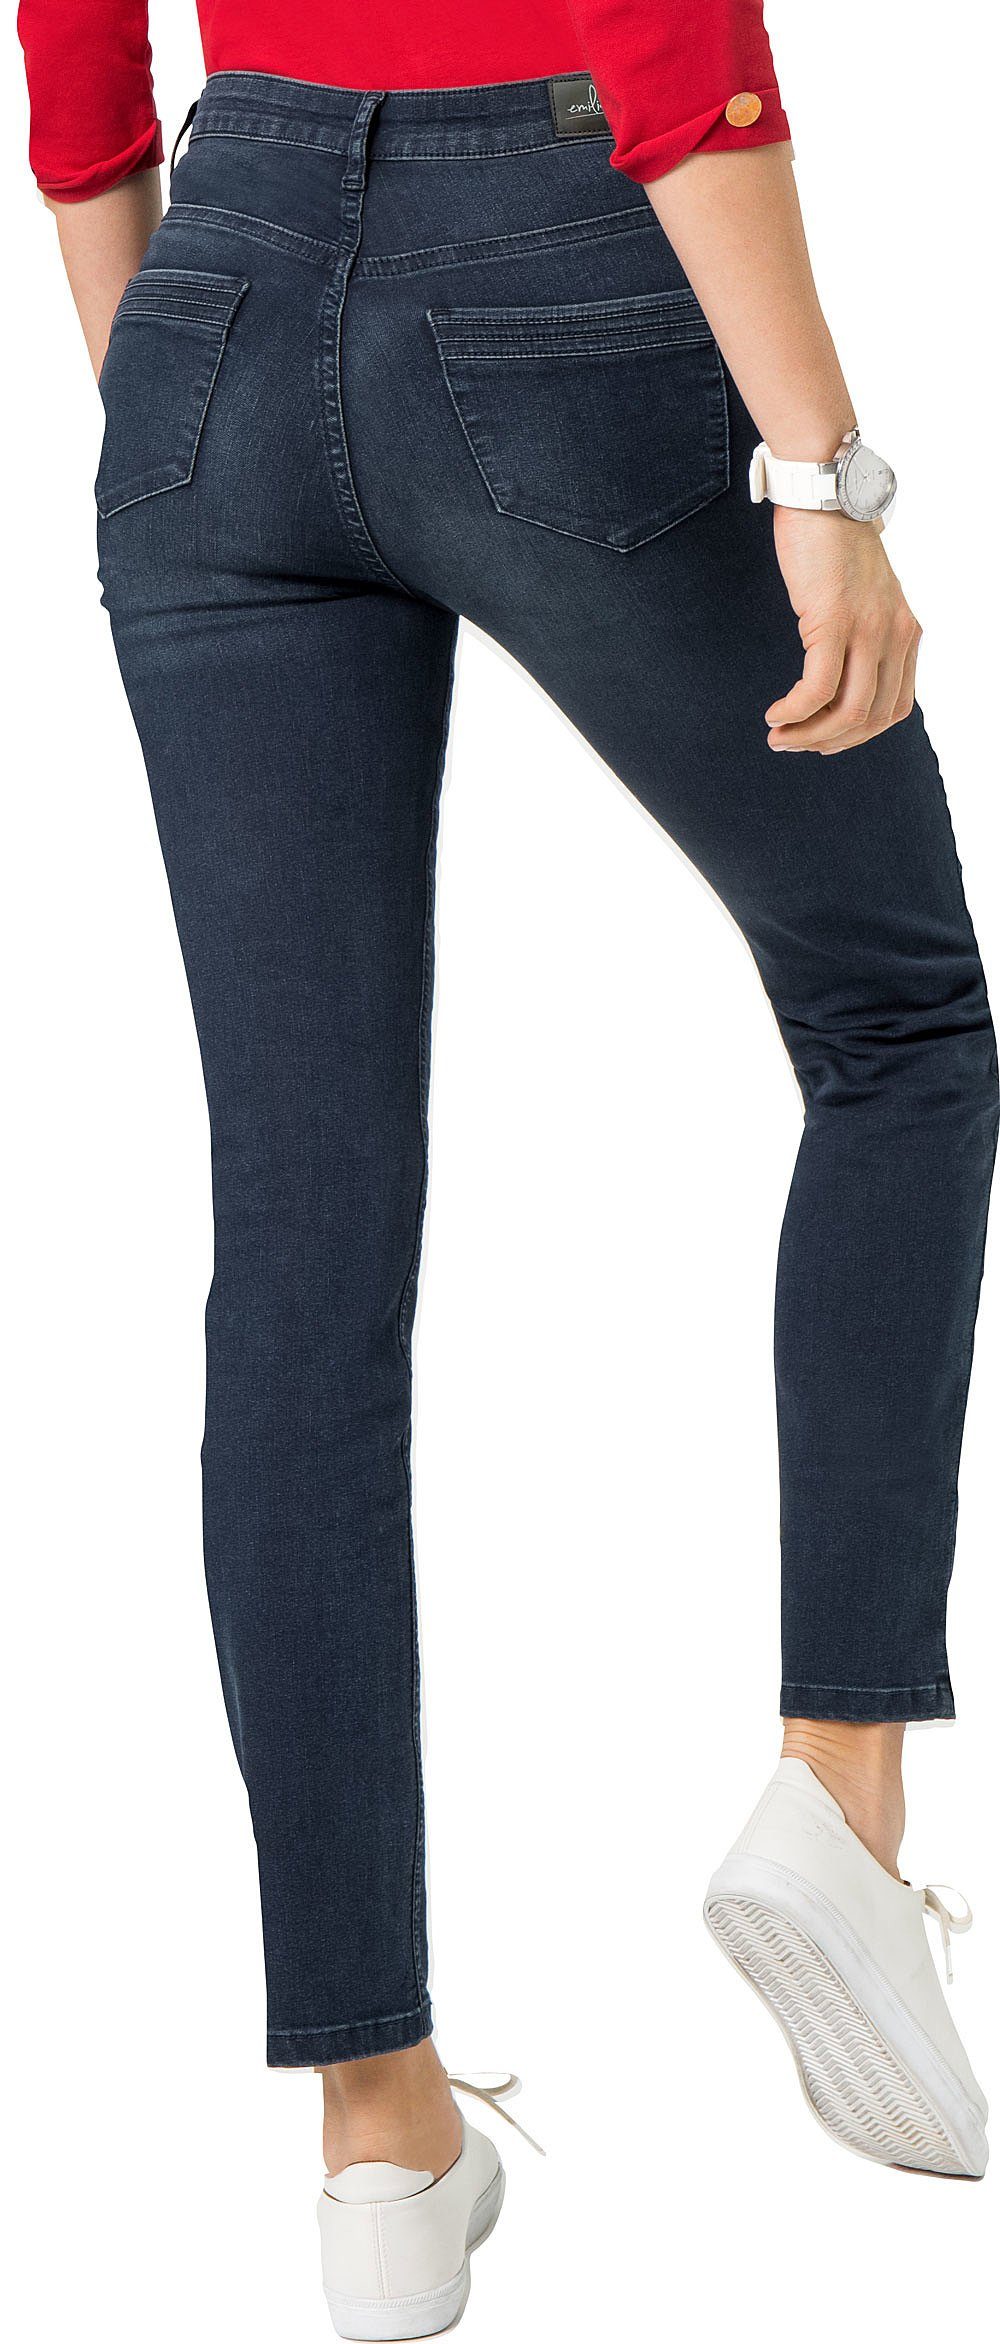 Emilia Parker Stretch-Hose ultrabequeme Sitz mit Jeans mittelblau knackigem